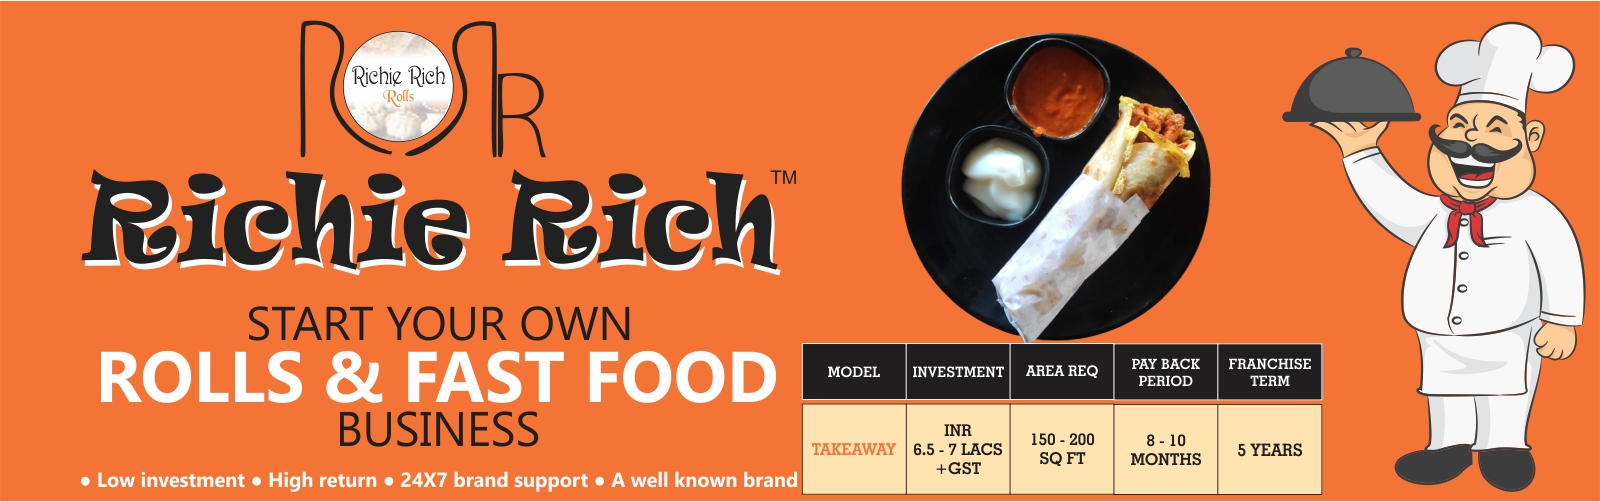 admin/uploads/brand_registration/Richie Rich Rolls - FASTEST GROWING ROLLS & FAST FOOD RANCHISE OPPORTUNITY